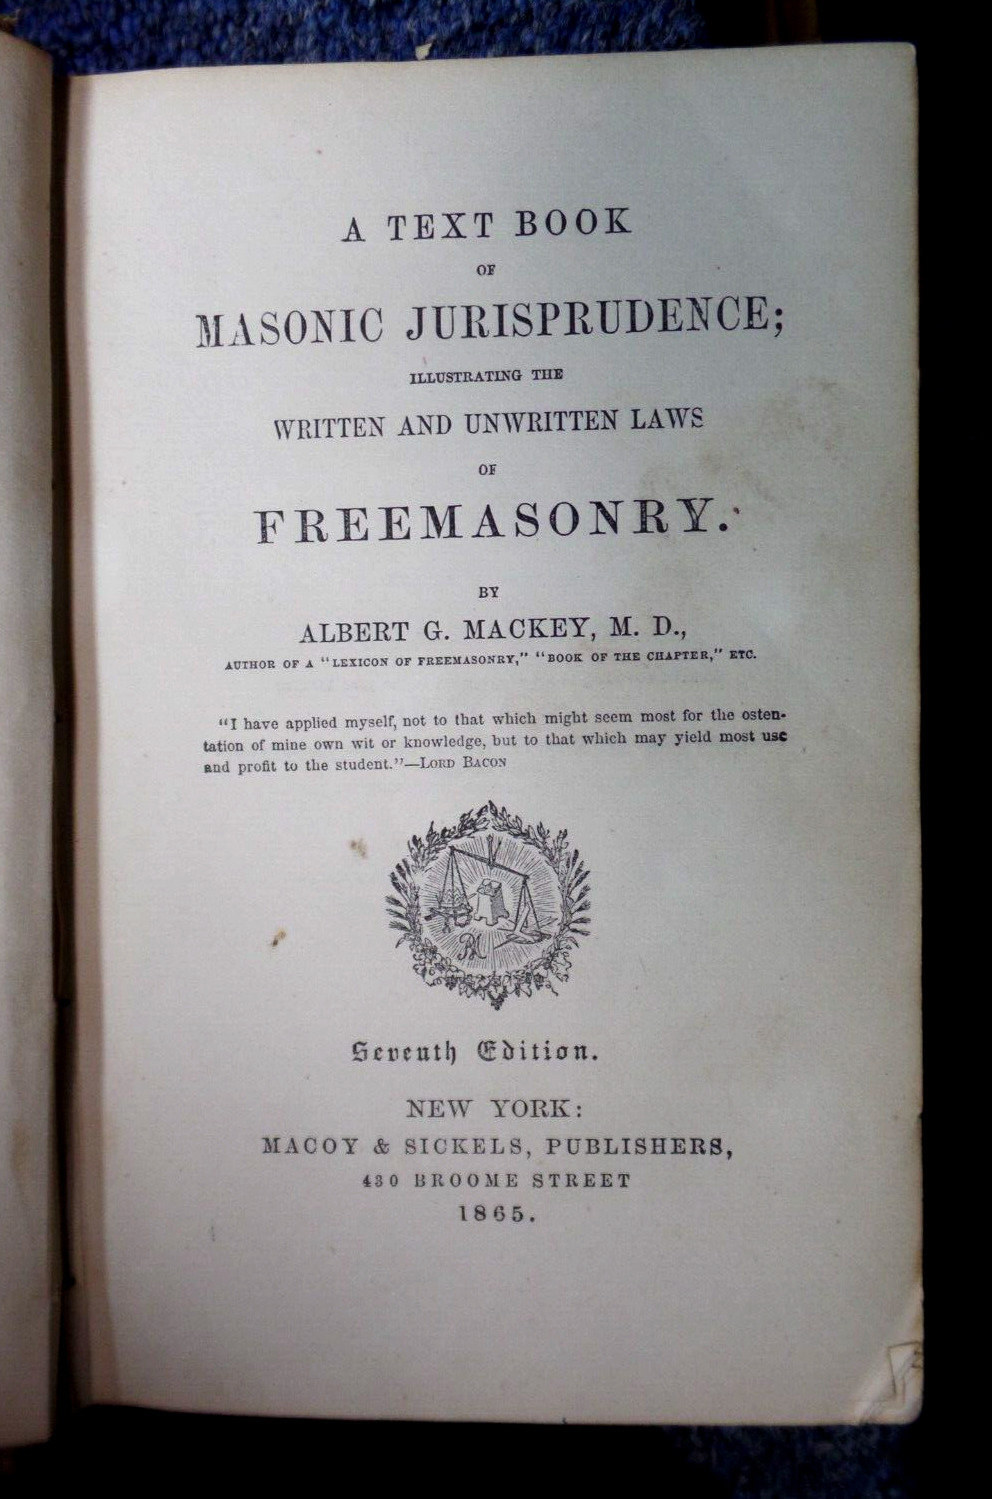 A Text Book Of Masonic Jurisprudence Mackey Macoy & Sickels, Philadelphia 1865